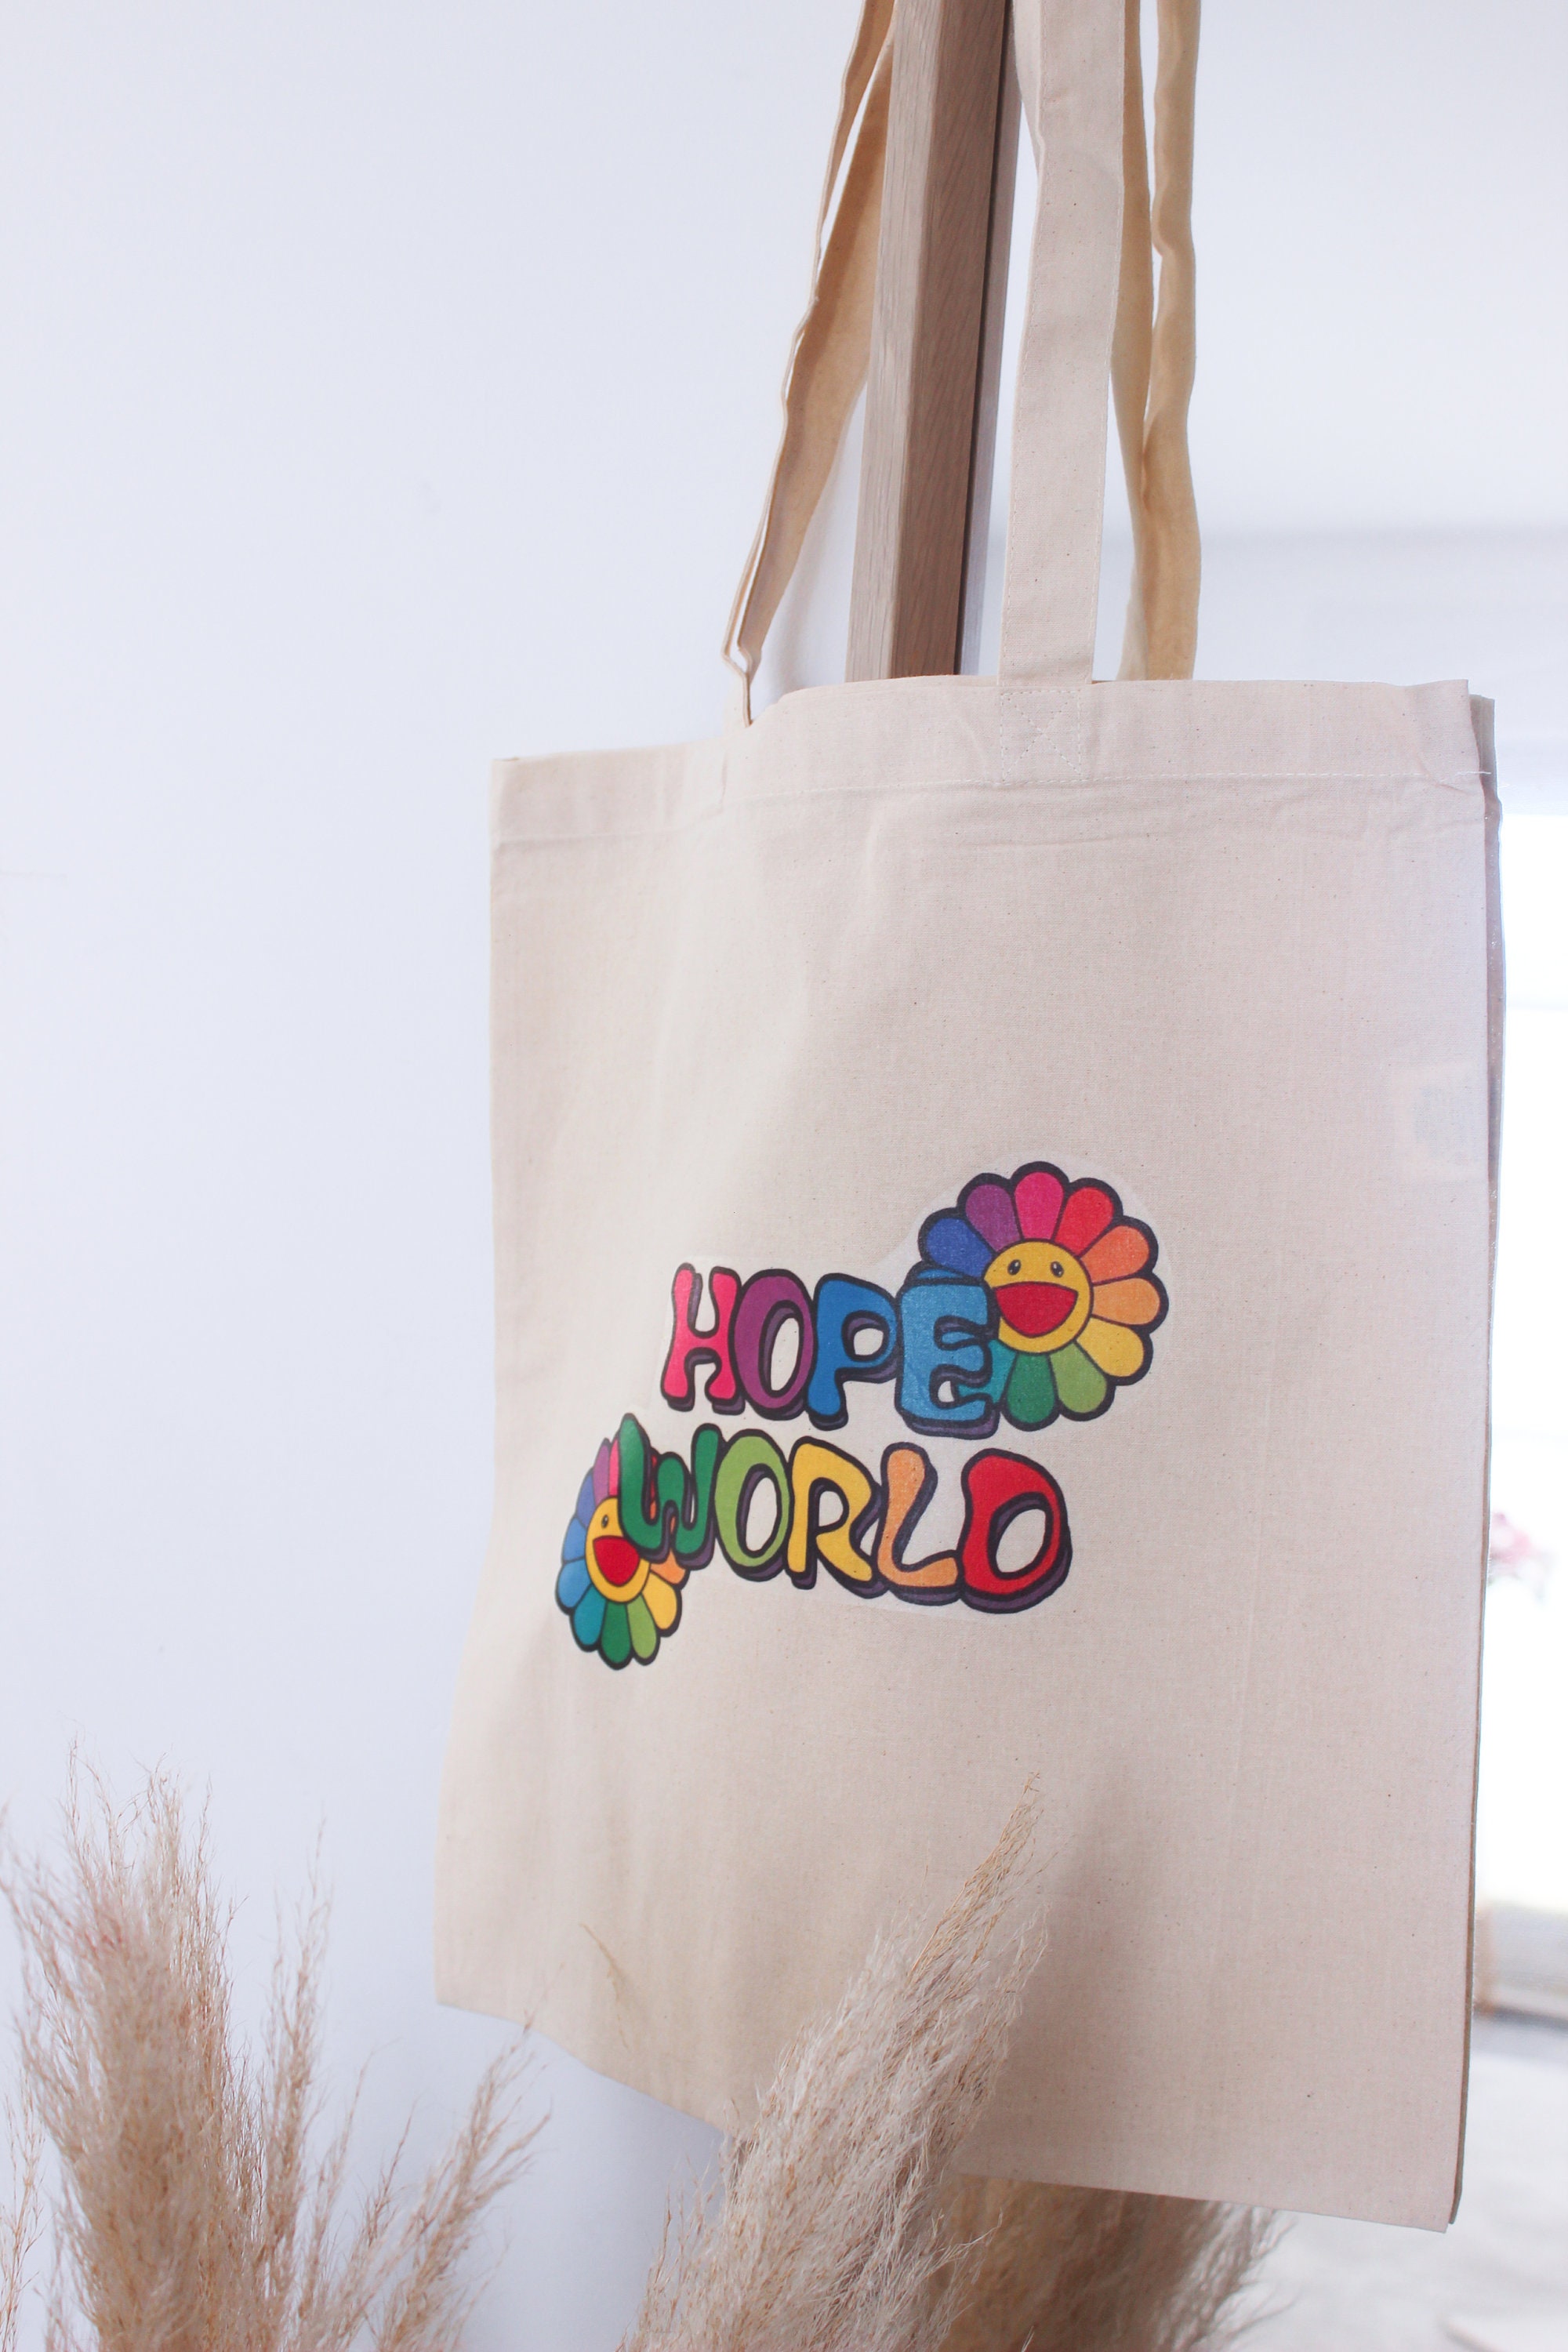 Hope World Tote Bag Removable Beaded Chain BTS J-hope Hobi 